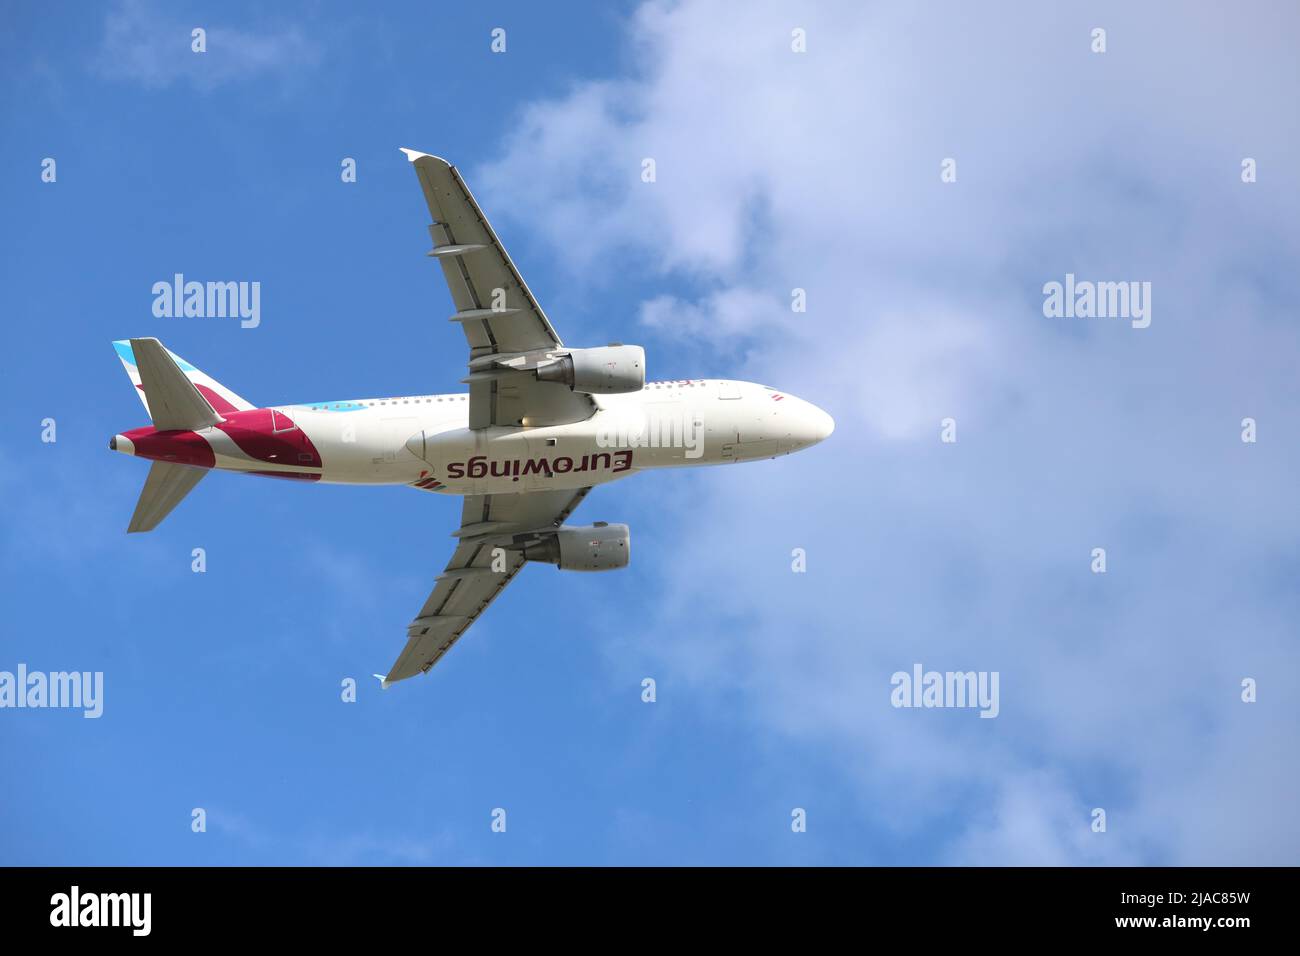 Startendes Flugzeug Eurowings. * Aeroplano ascendente Eurowings. Credit: Momenti di aviazione / Alamy Stock Foto Foto Stock